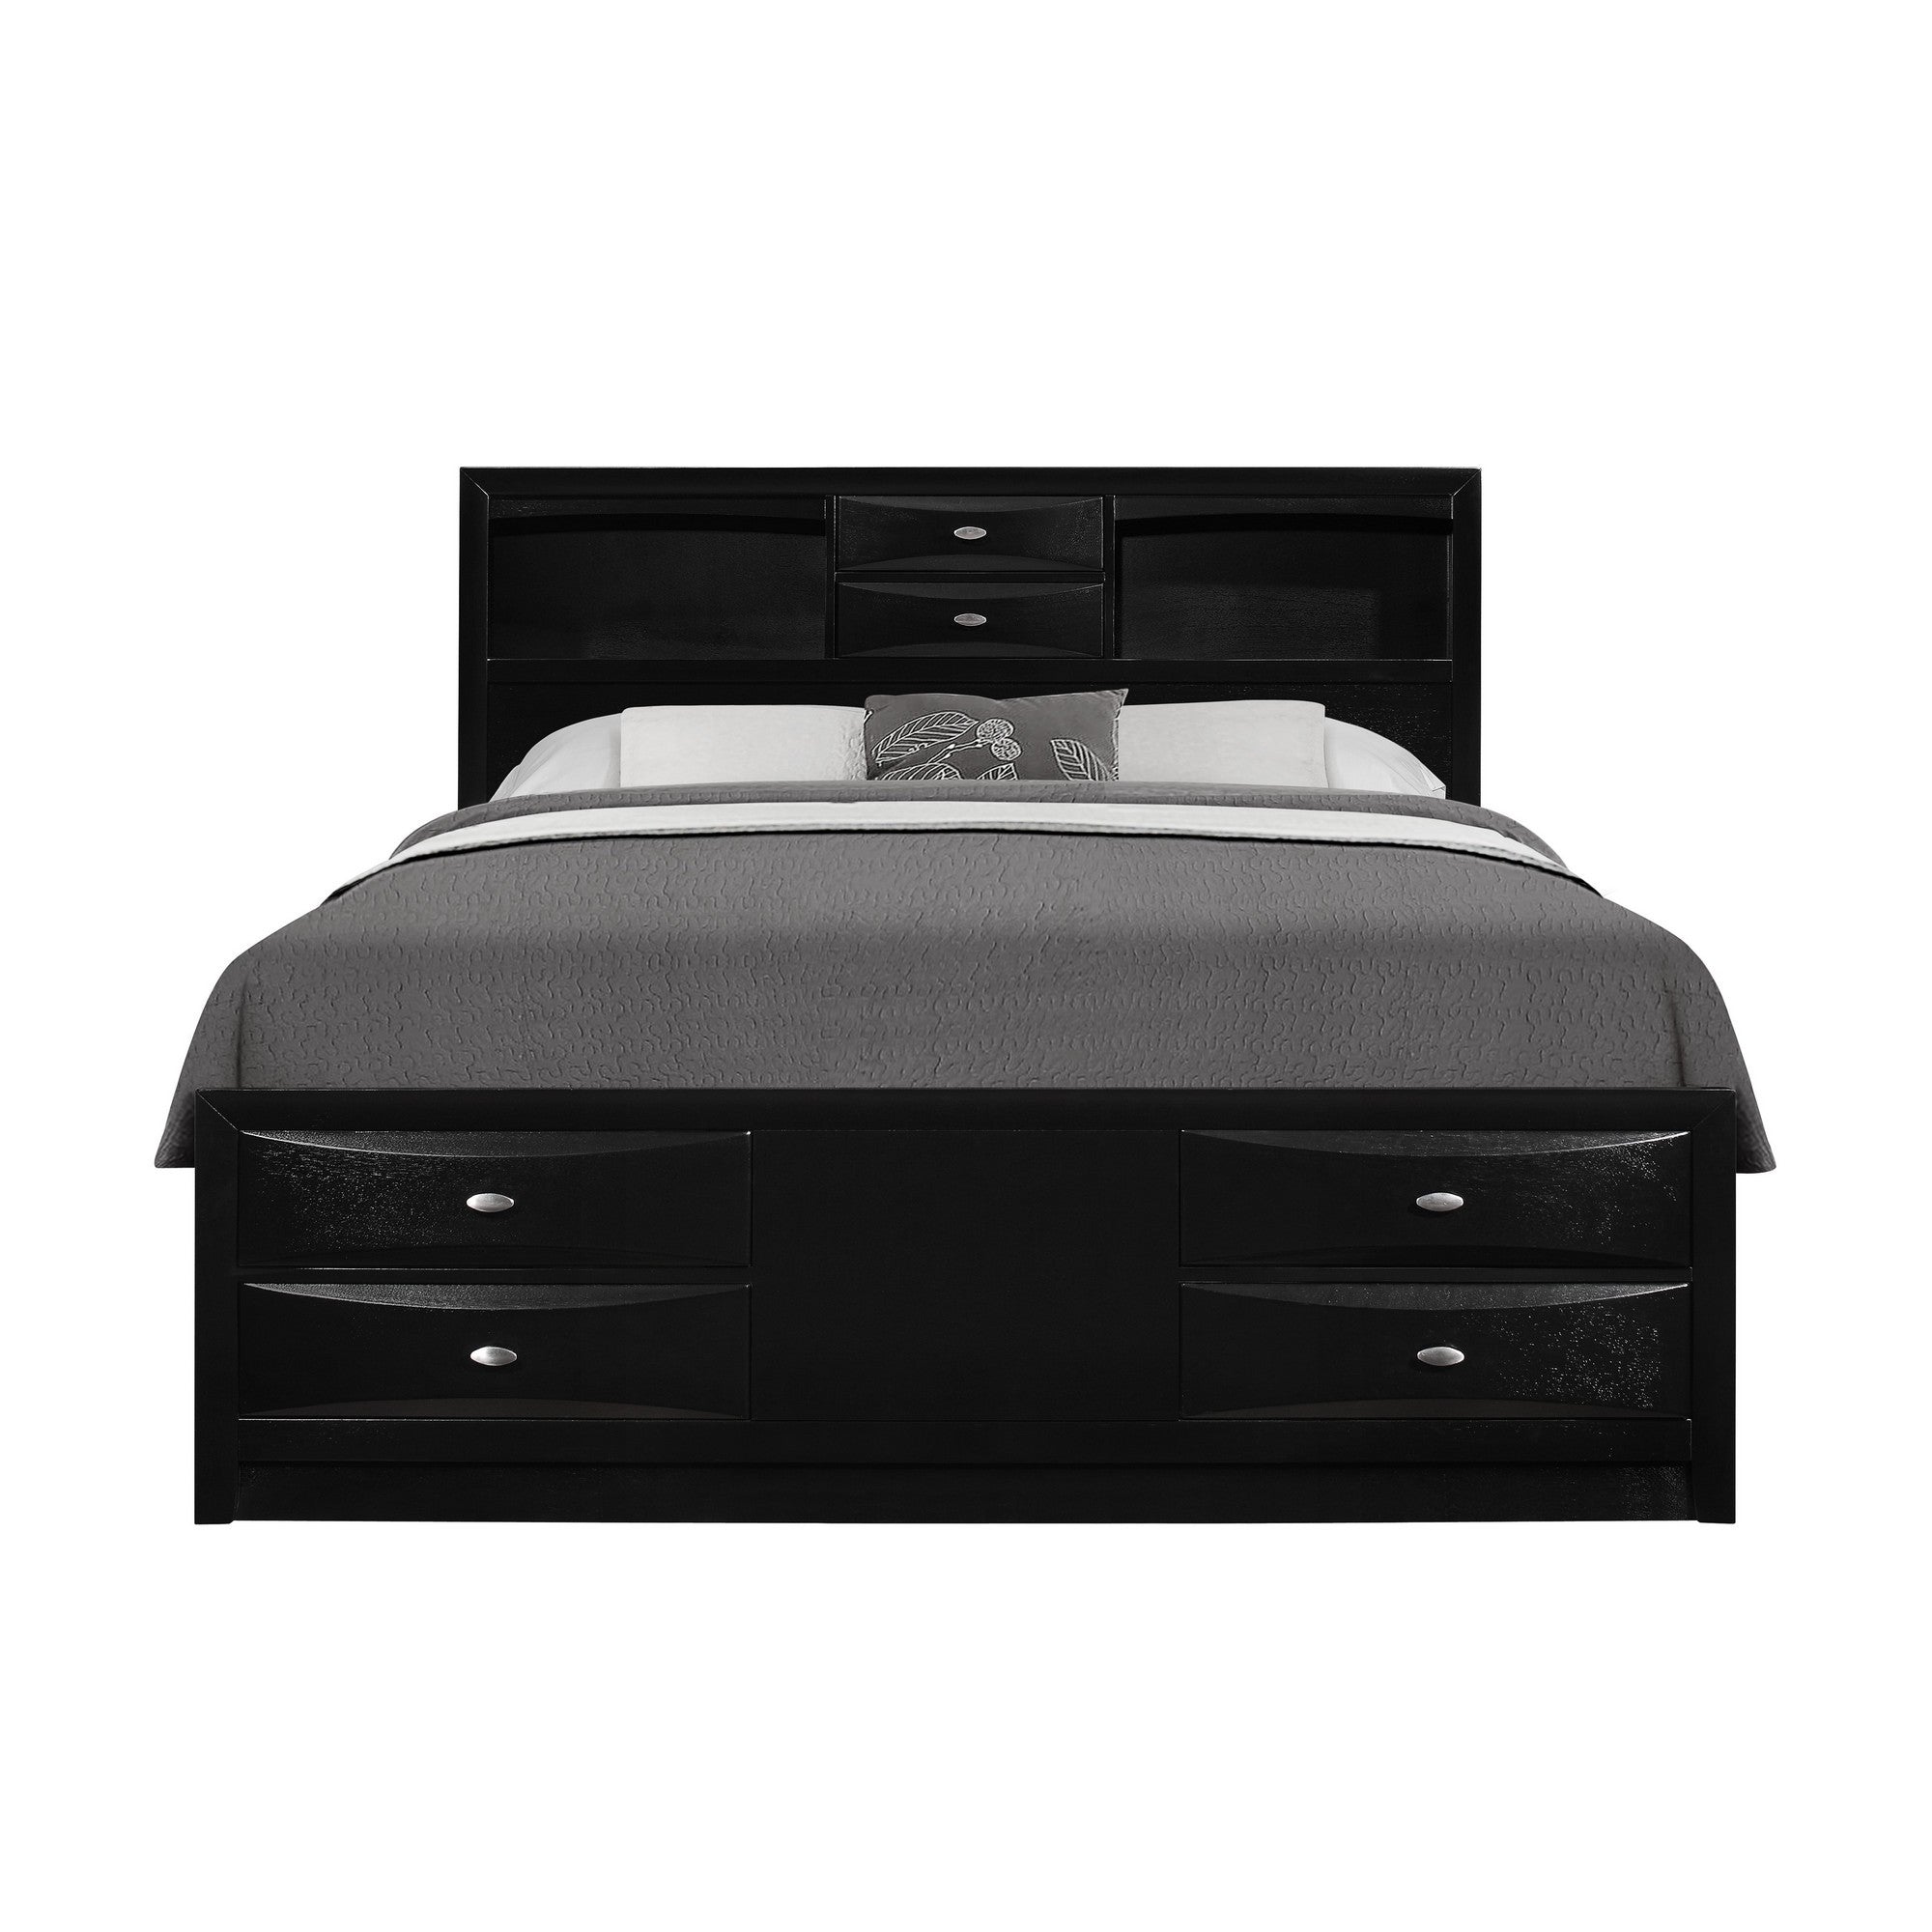 Black Veneer Queen Bed with bookcase headboard  10 drawers Default Title